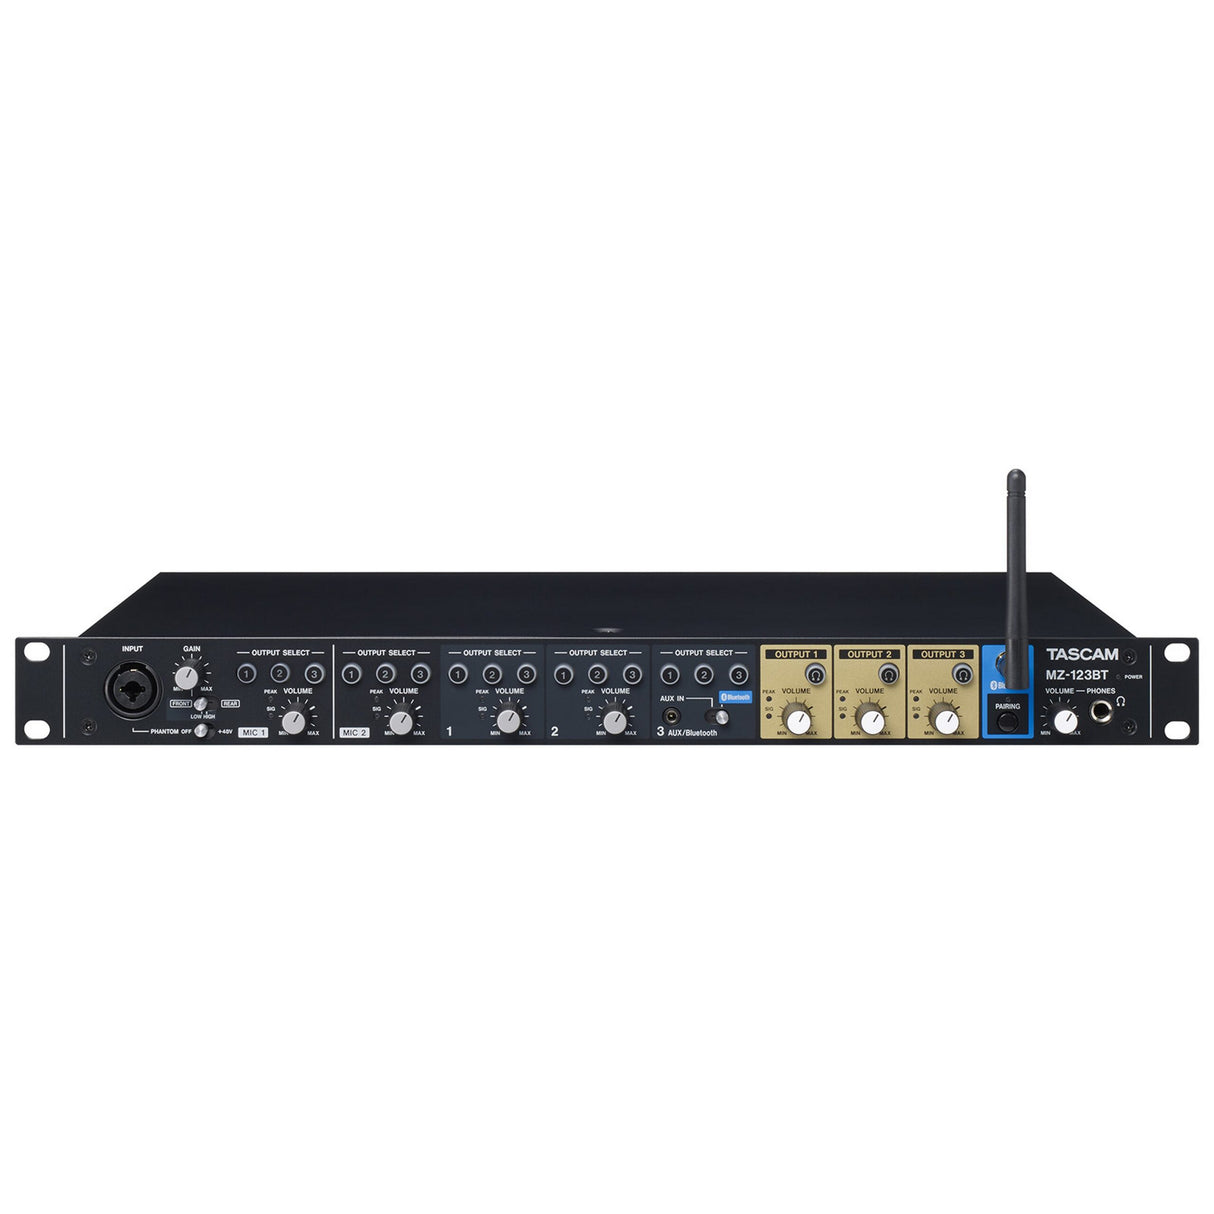 Tascam MZ-123BT 3 Channel Commerical Grade Multi-Zone Audio Mixer